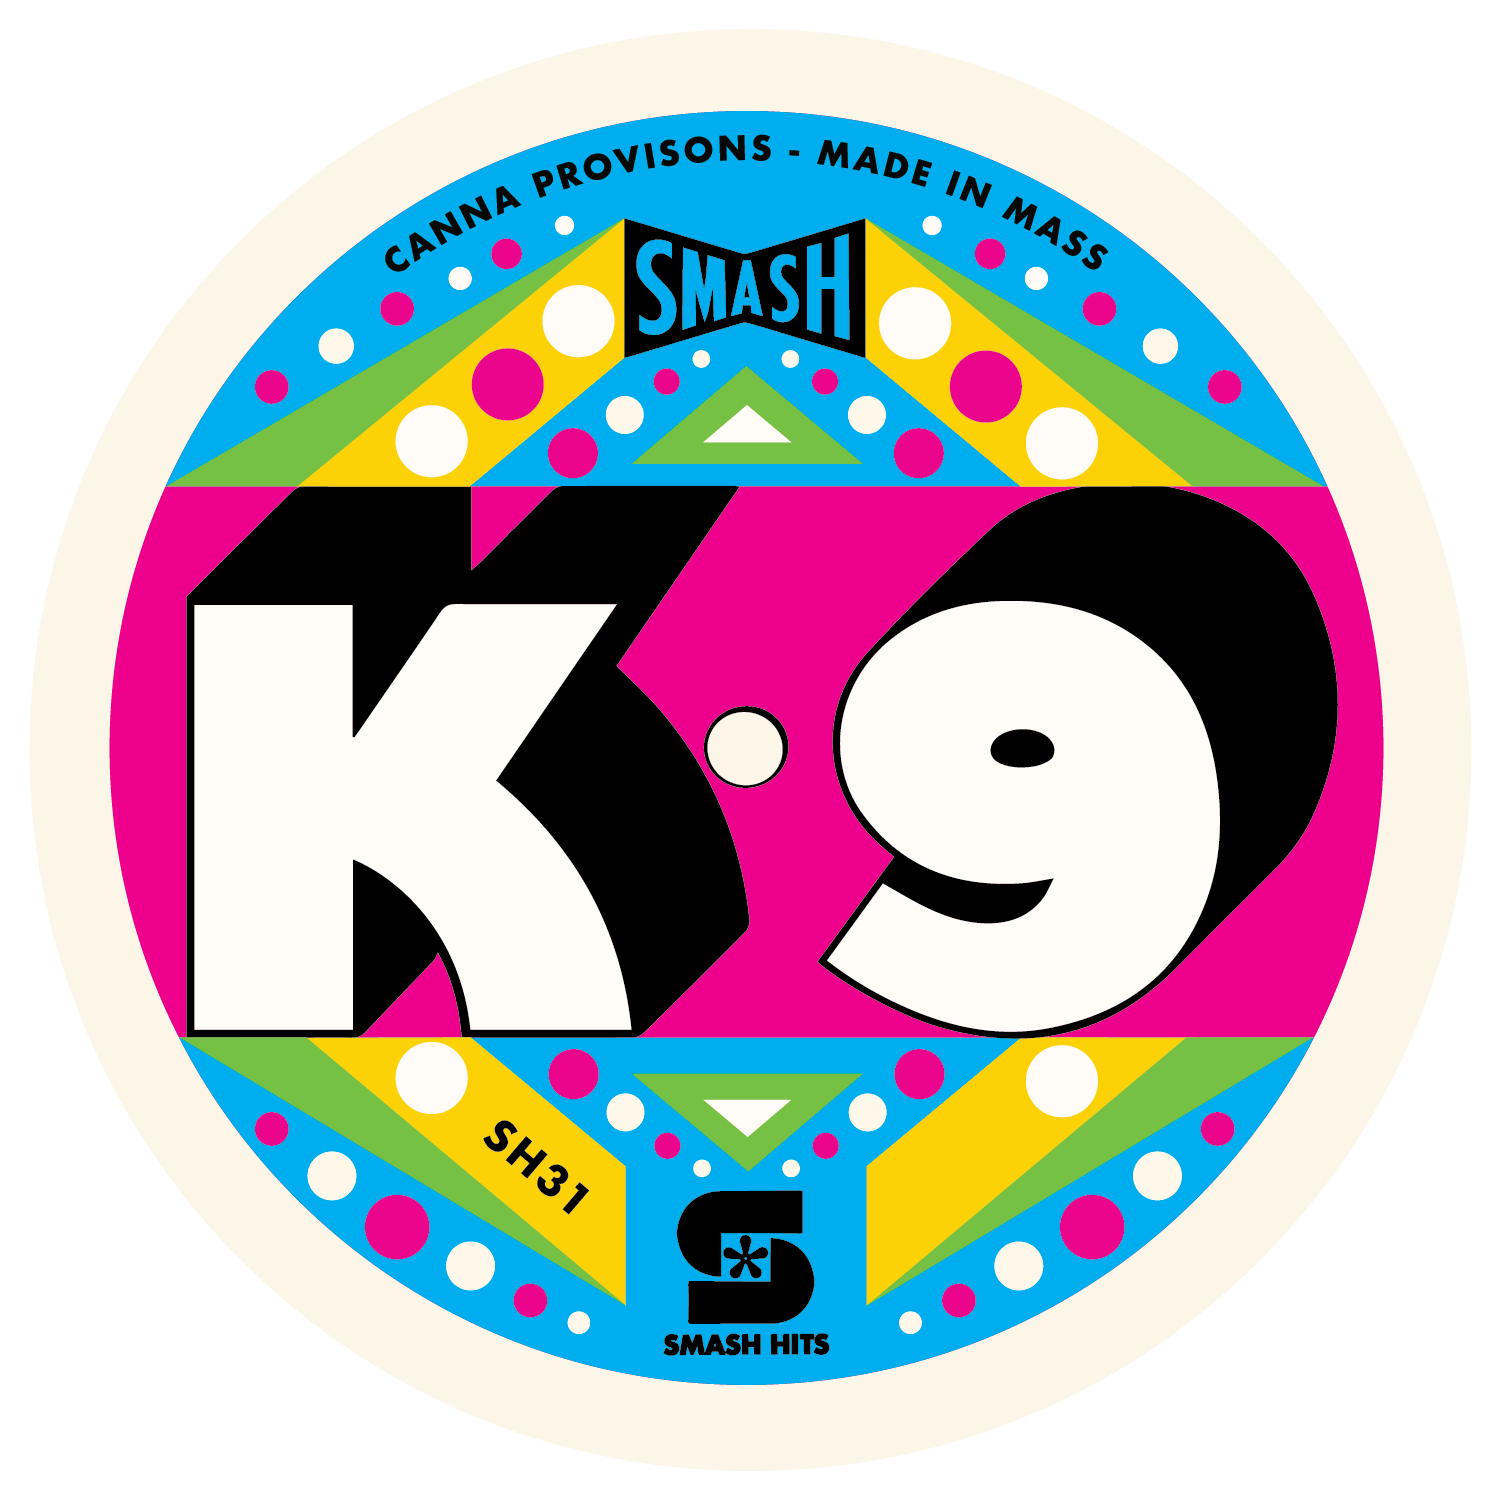 K9 strain smash hits chemdog canna provisions